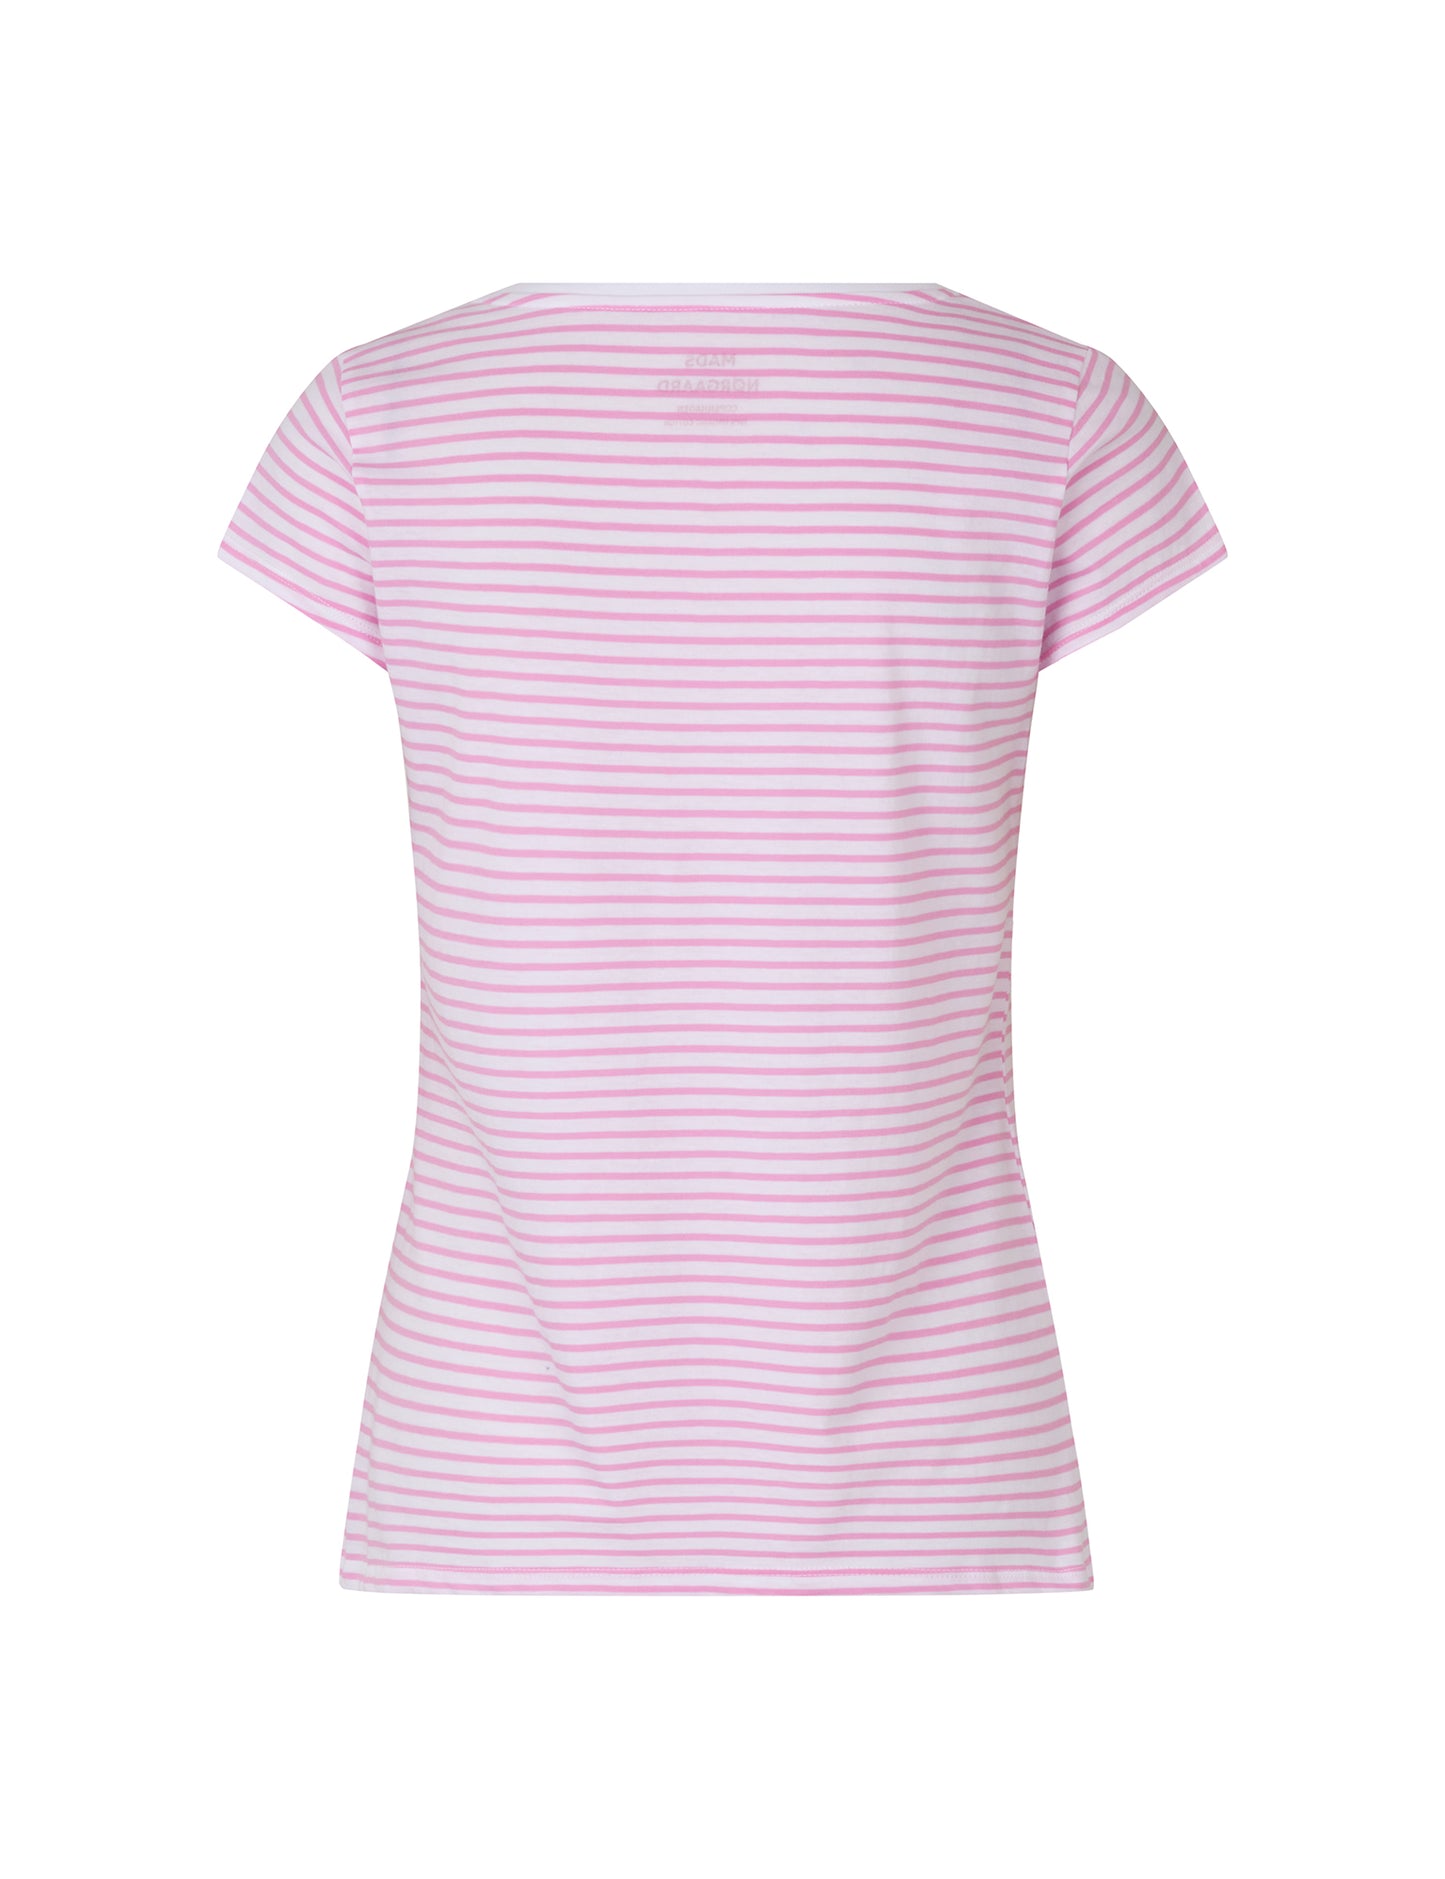 Organic Jersey Stripe Teasy Tee FAV, Begonia Pink/Brilliant White